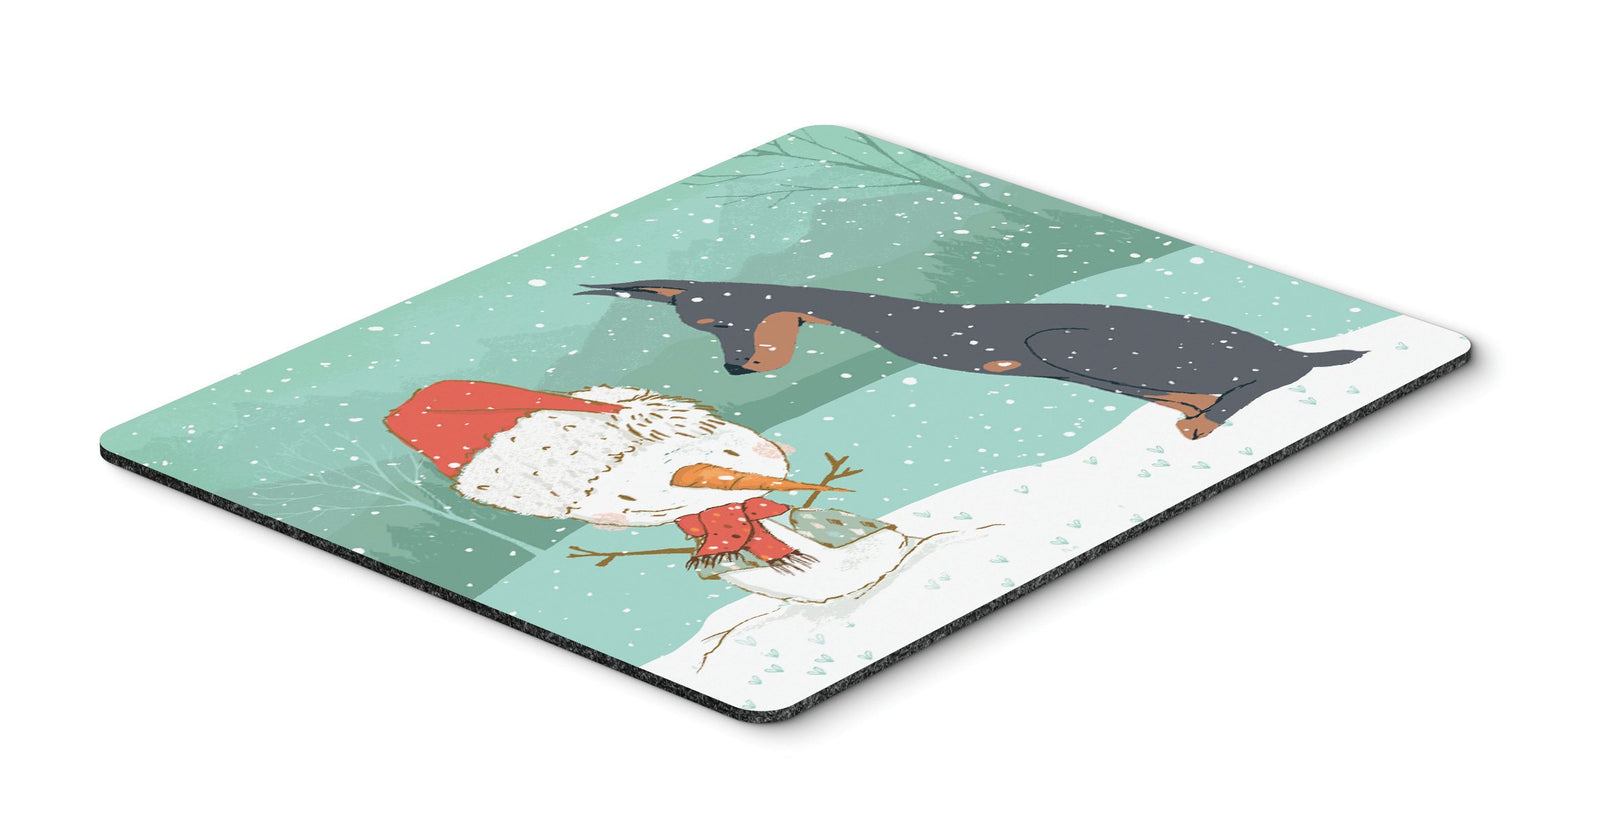 Doberman and Snowman Christmas Mouse Pad, Hot Pad or Trivet CK2038MP by Caroline's Treasures